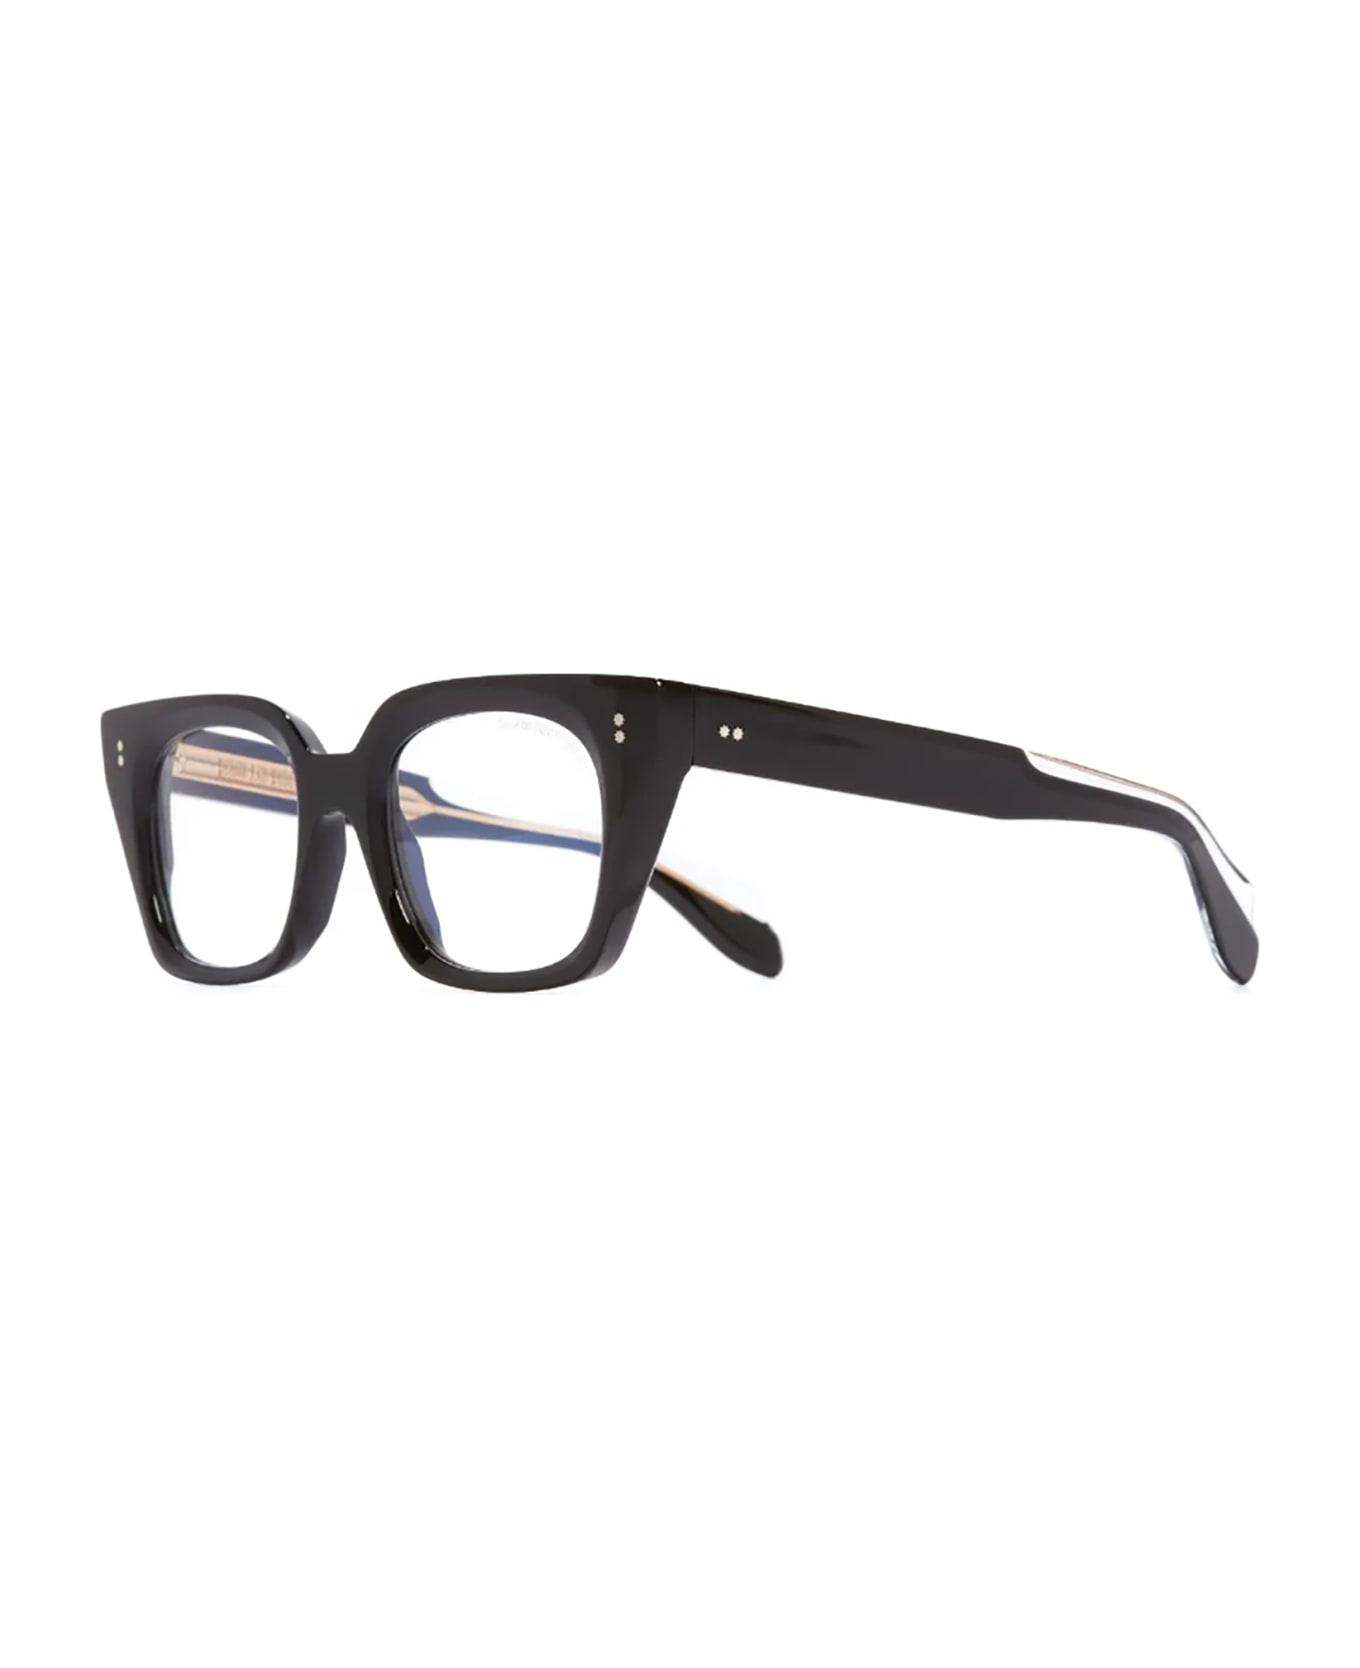 Cutler and Gross 1411 Eyewear - Black アイウェア